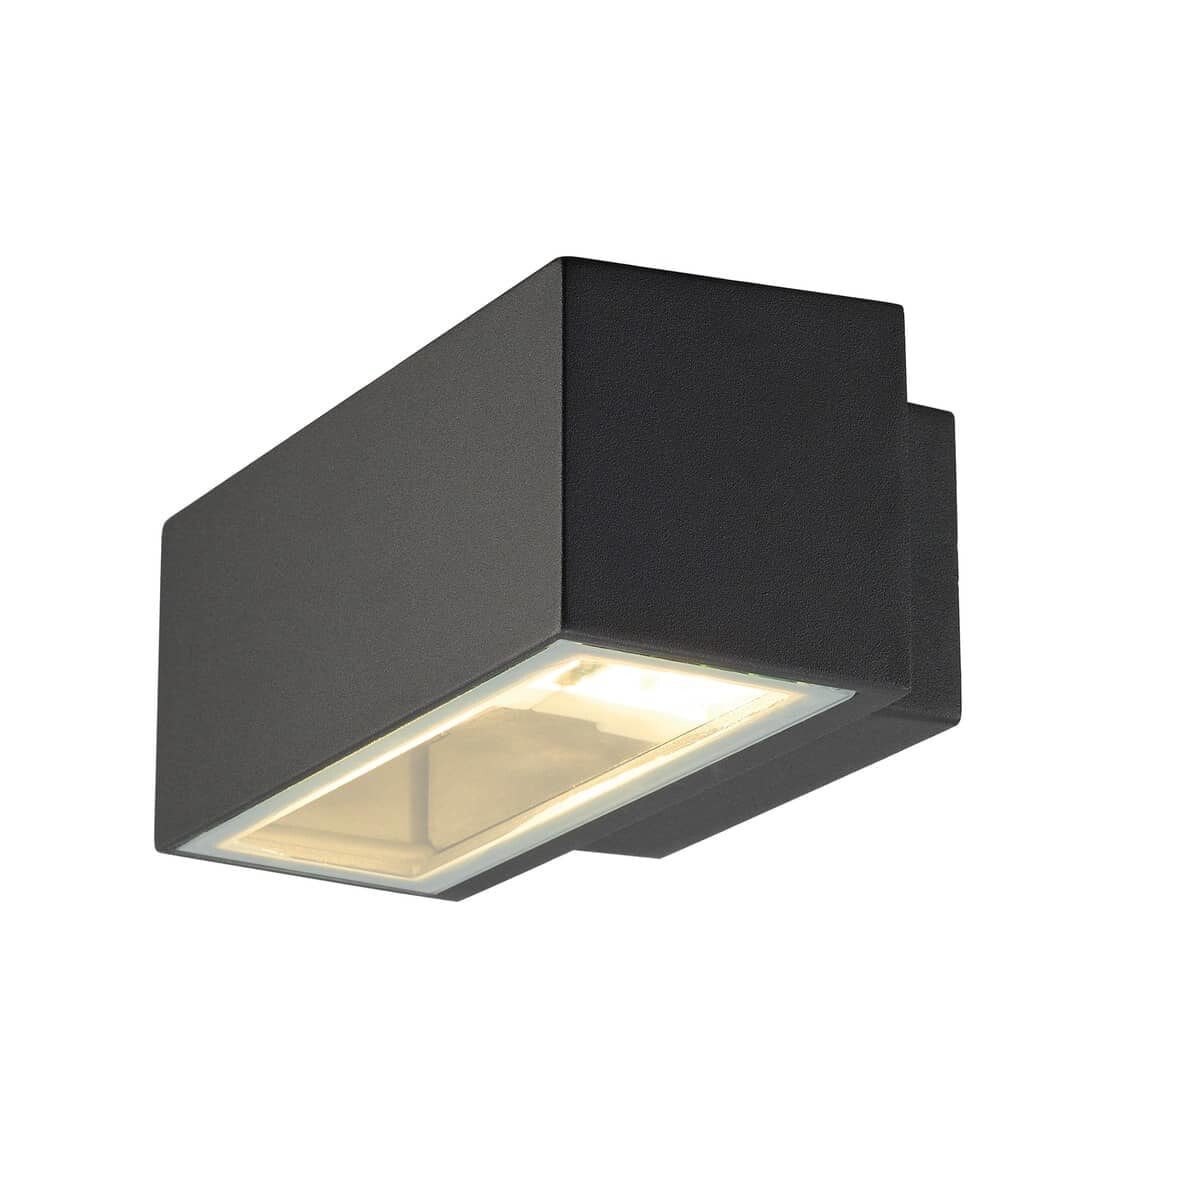 SLV BOX - Outdoor wall lighting - Anthracite - Aluminium - IP44 - IP54 - Facade - Lawn - I